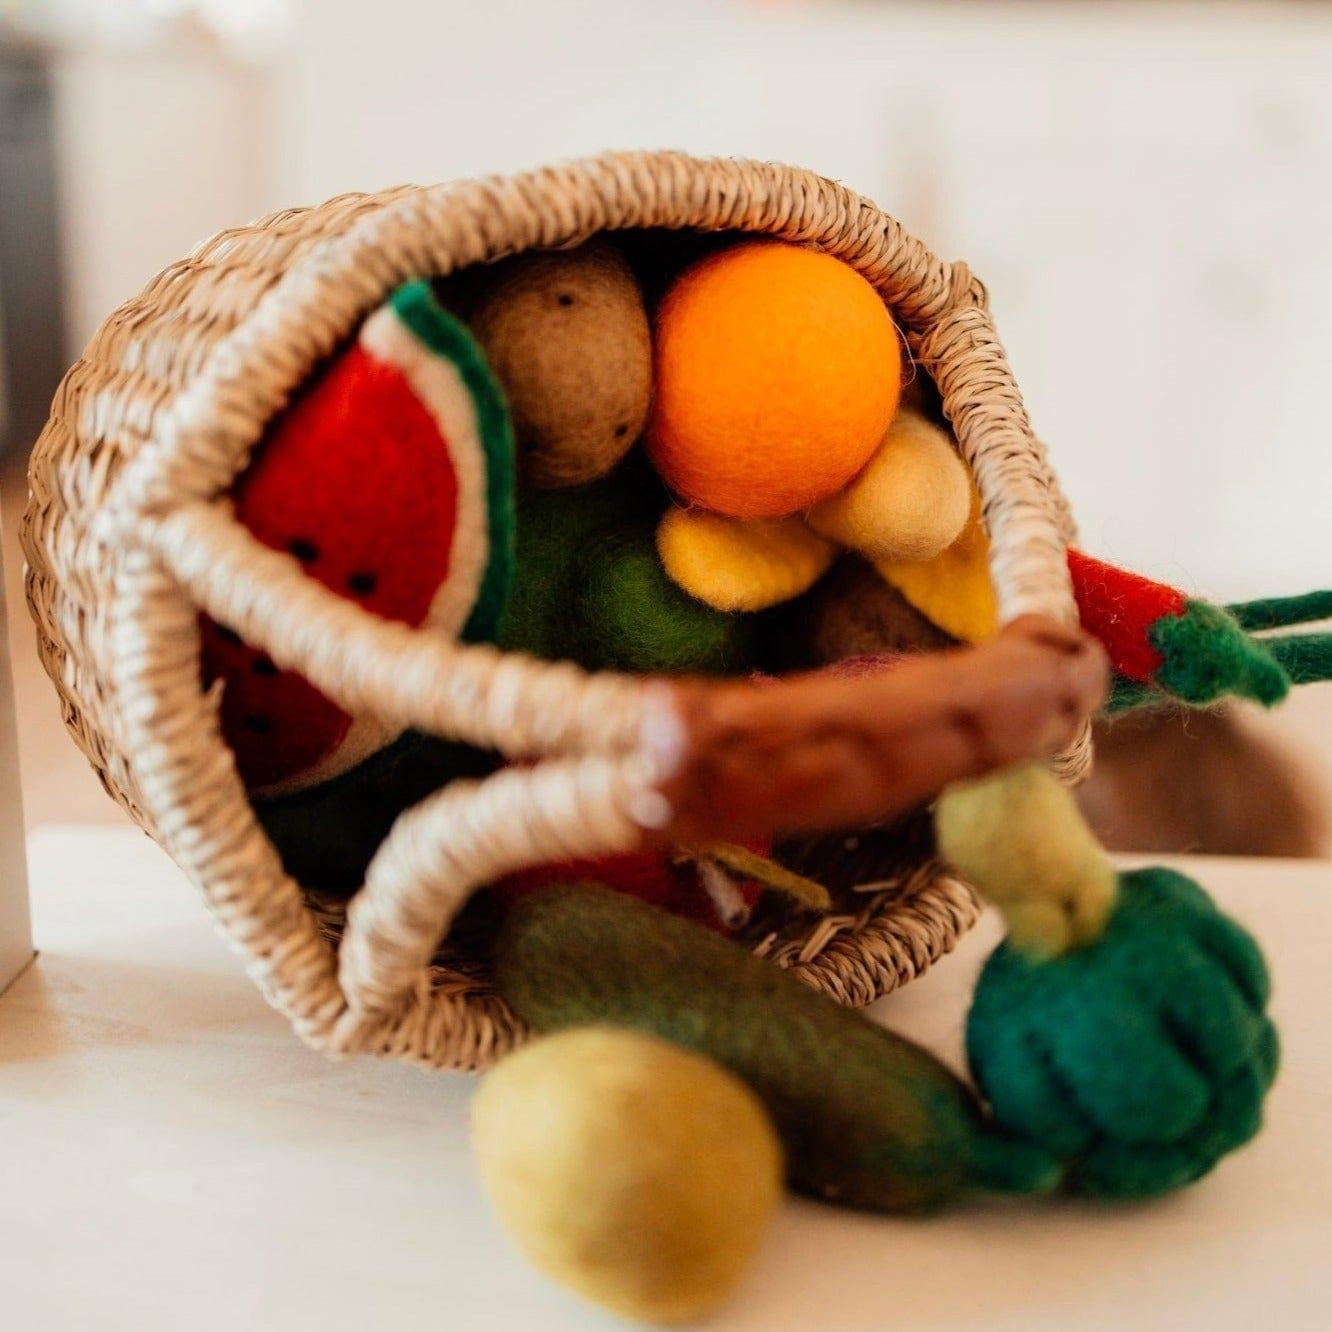 The Curated Parcel - Felt Vegetables & Fruits Set B 